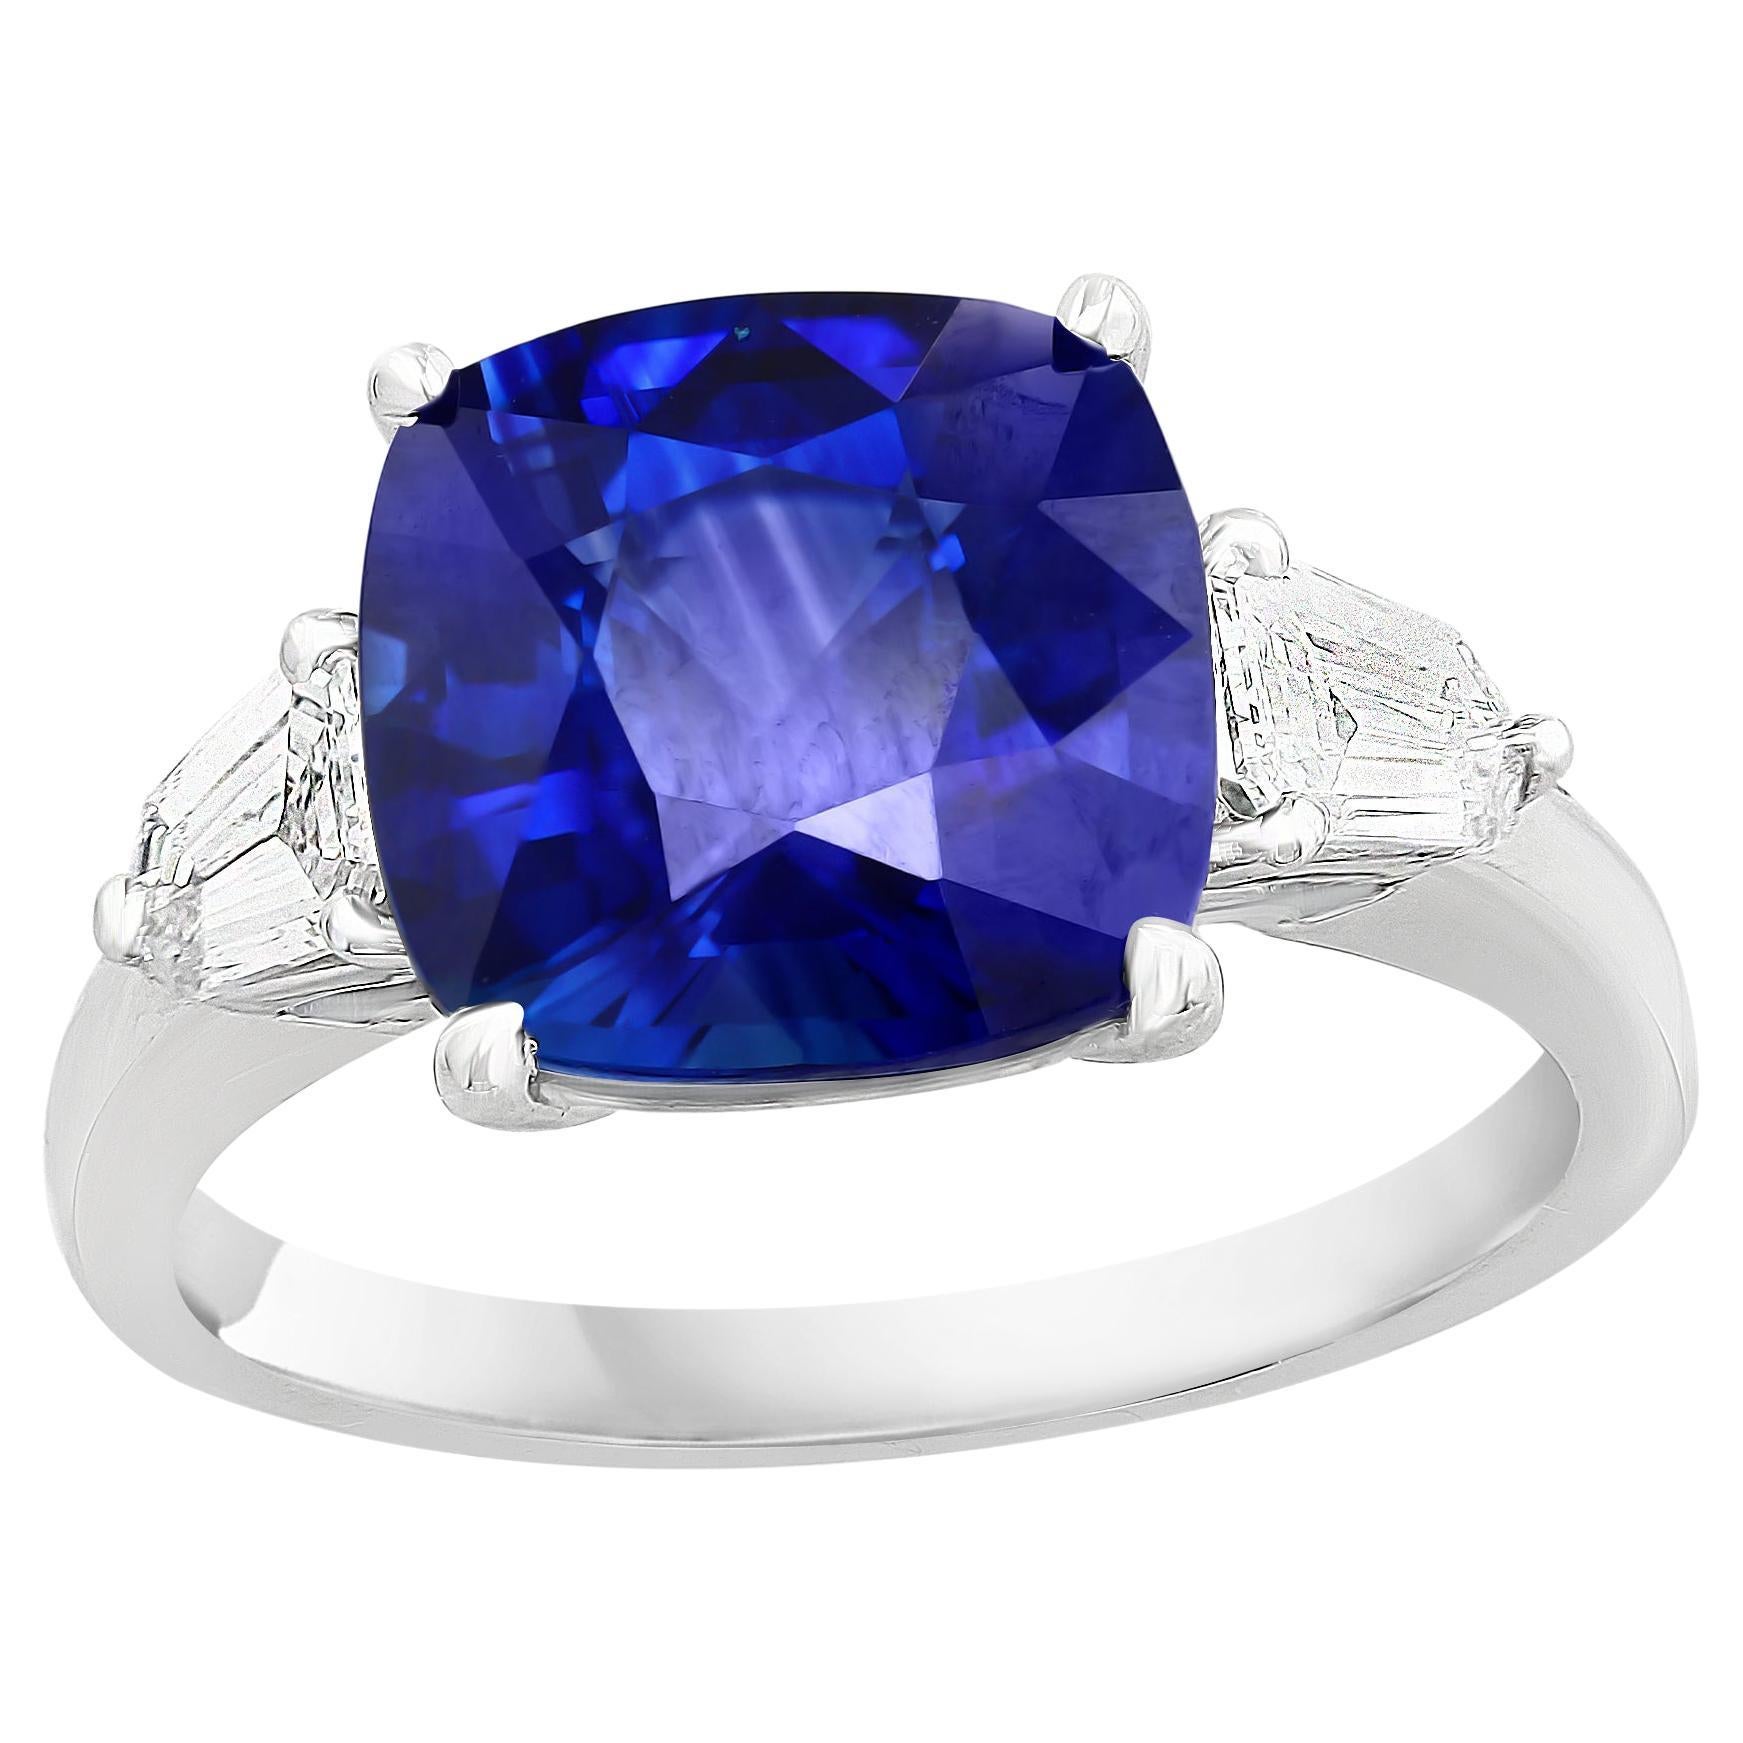 4.22 Carat Cushion Cut Blue Sapphire Diamond Three-Stone Ring in Platinum